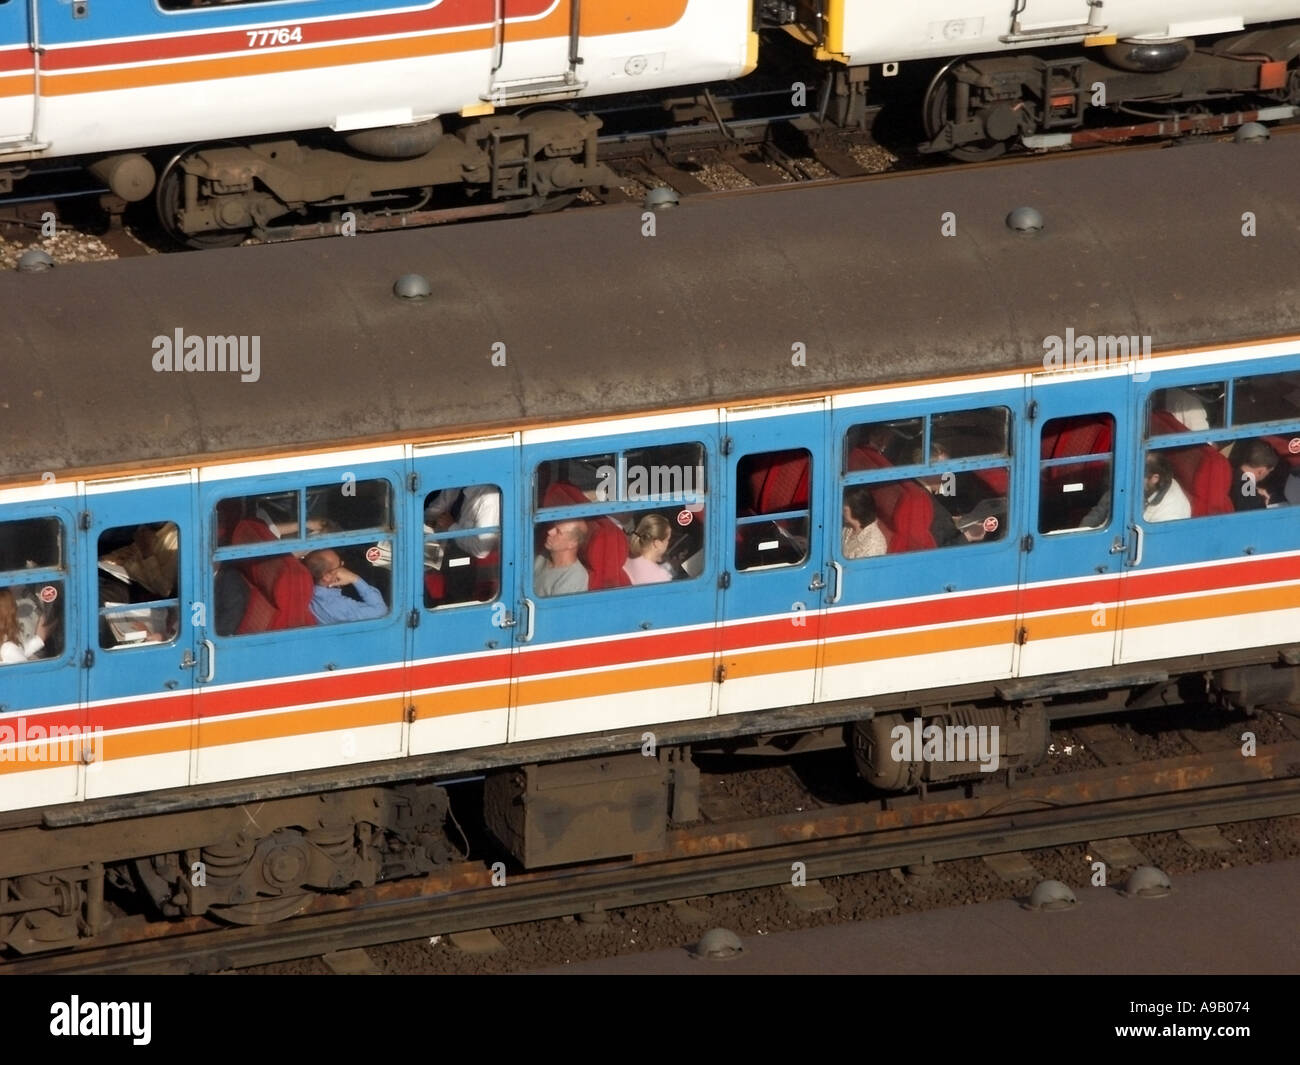 Crowded slam door type train Stock Photo